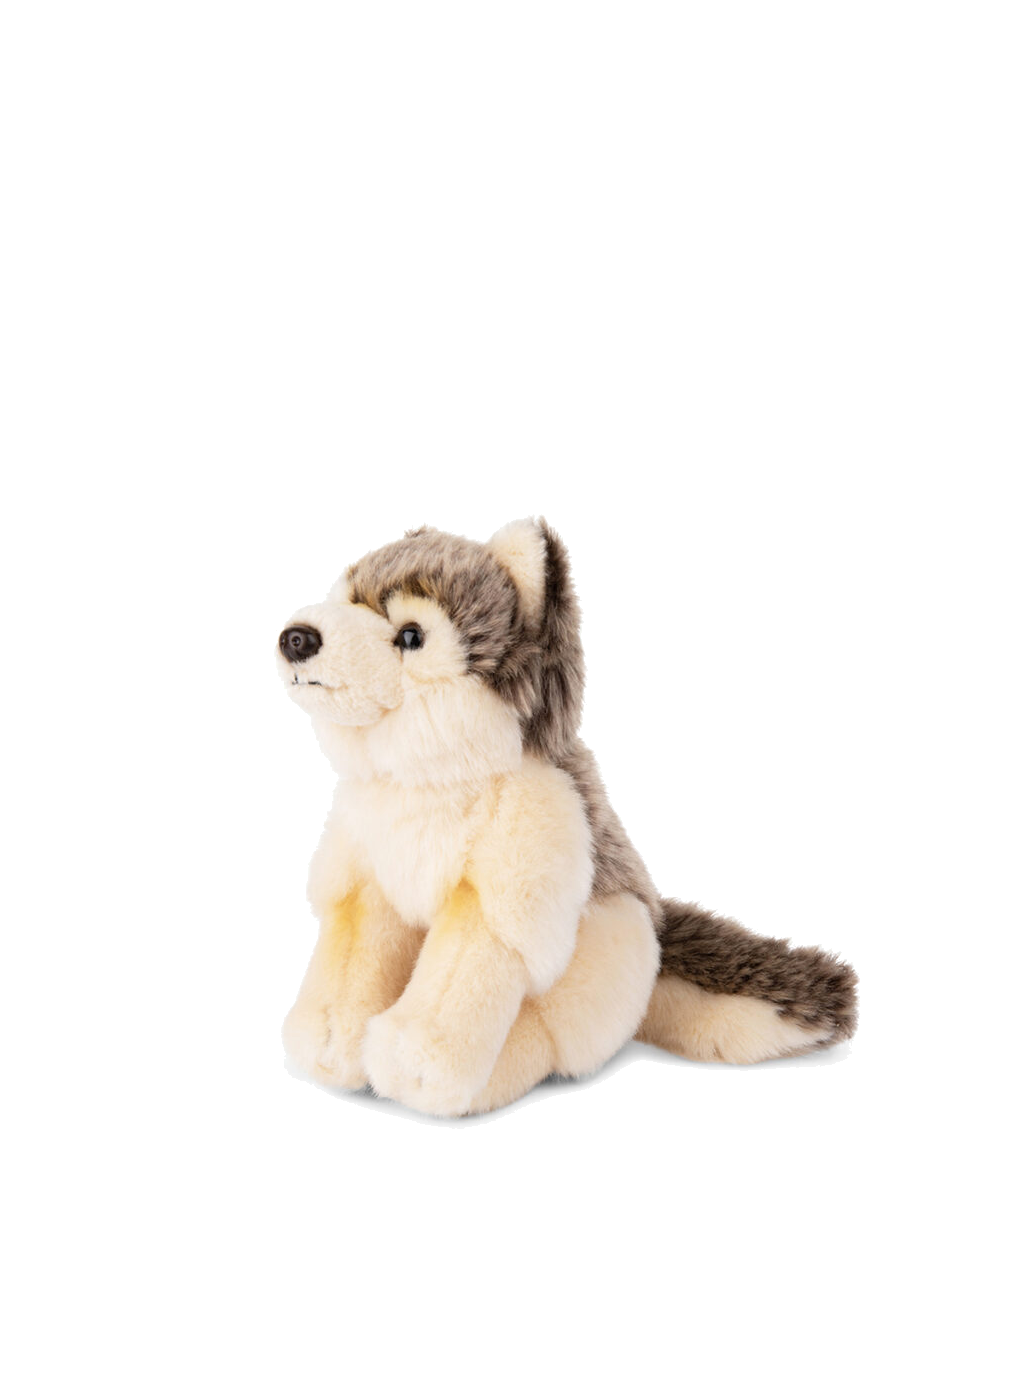 Recyklovaná plyšová hračka WWF vlka